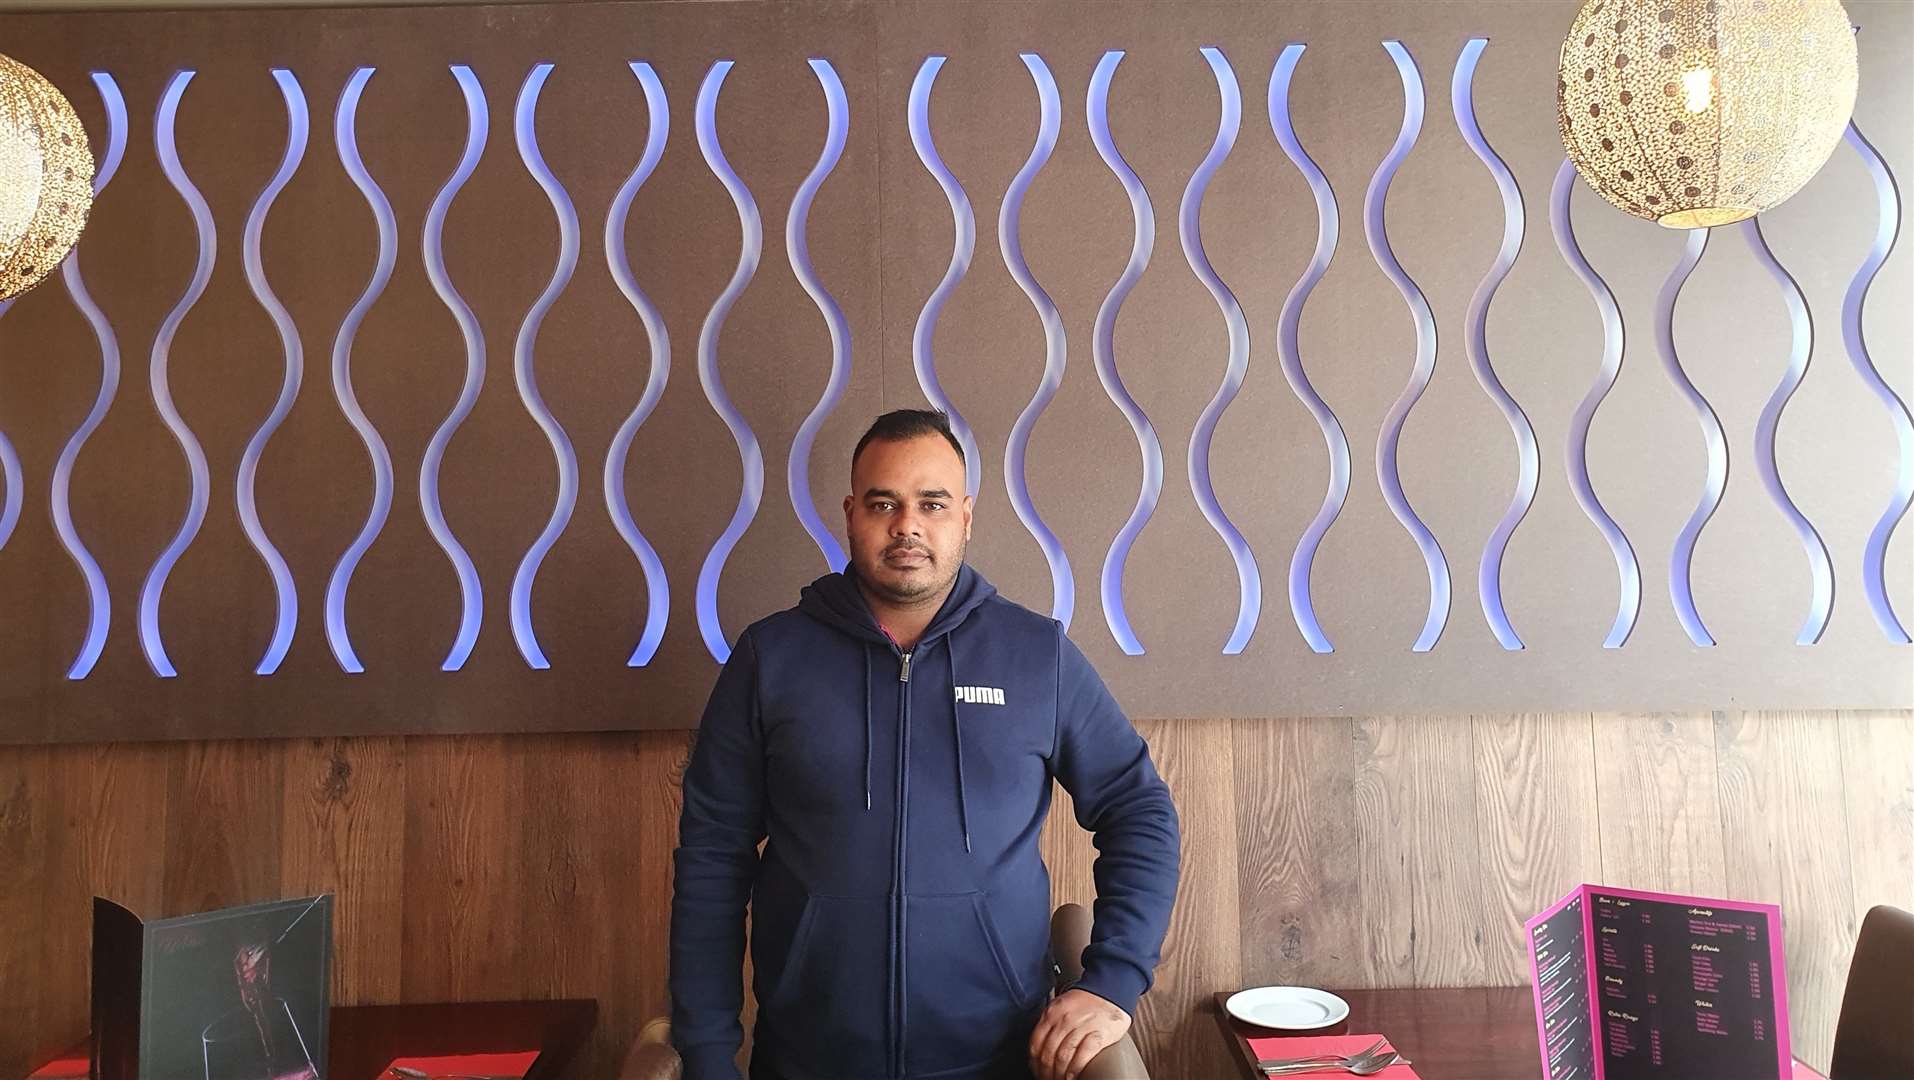 Shekhrul Alom owns the Spice of India restaurant